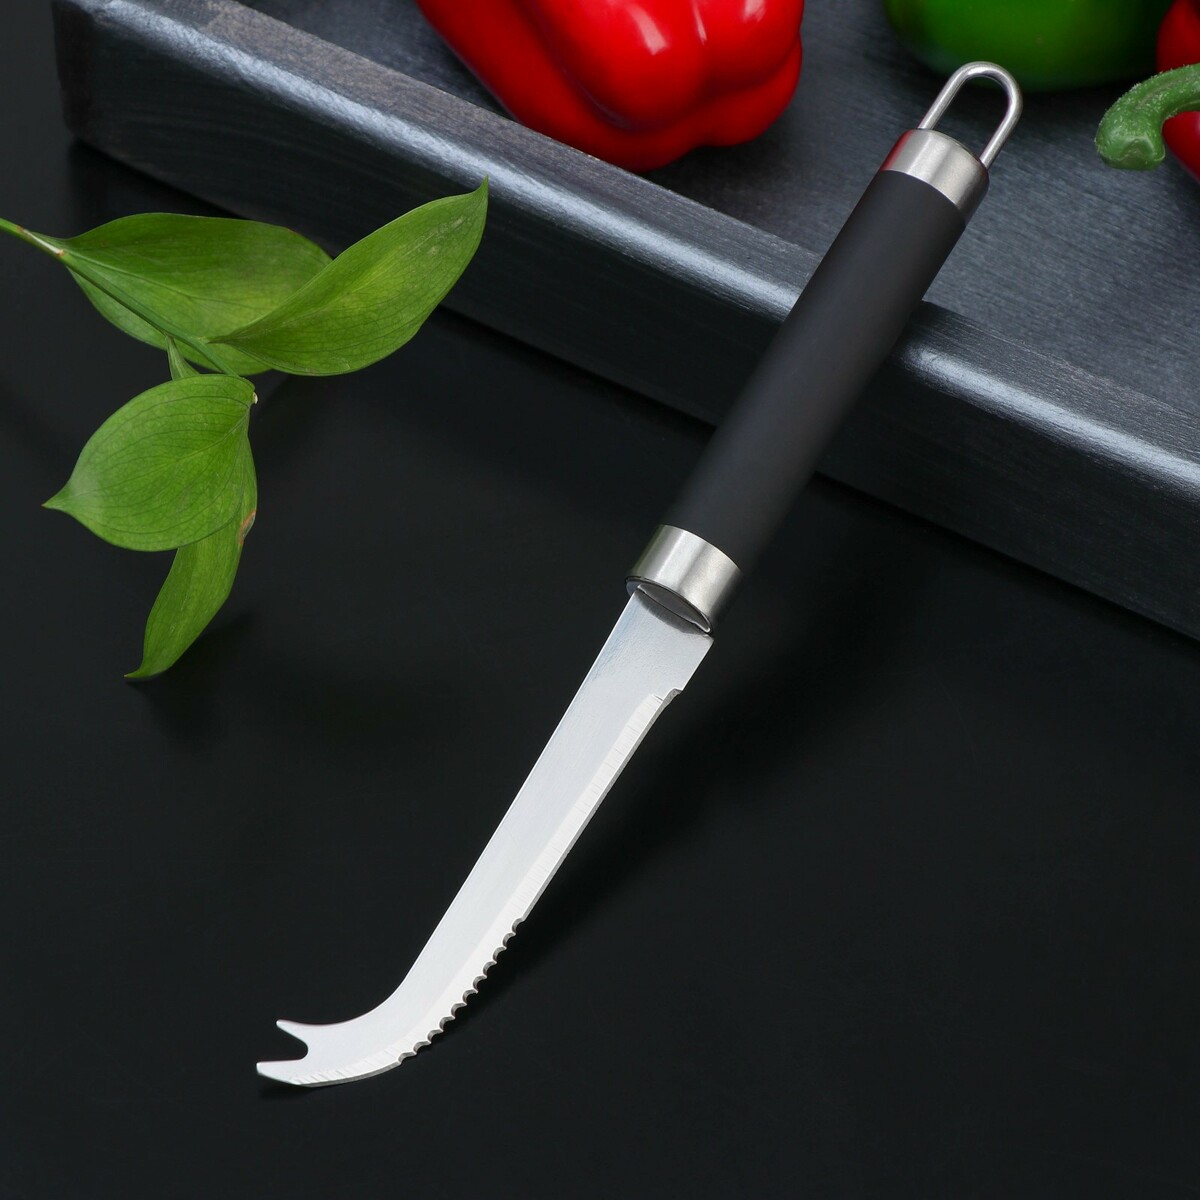 Нож для сыра доляна venus, нержавеющая сталь, цвет черный нож для масла доляна venus нержавеющая сталь 25 см